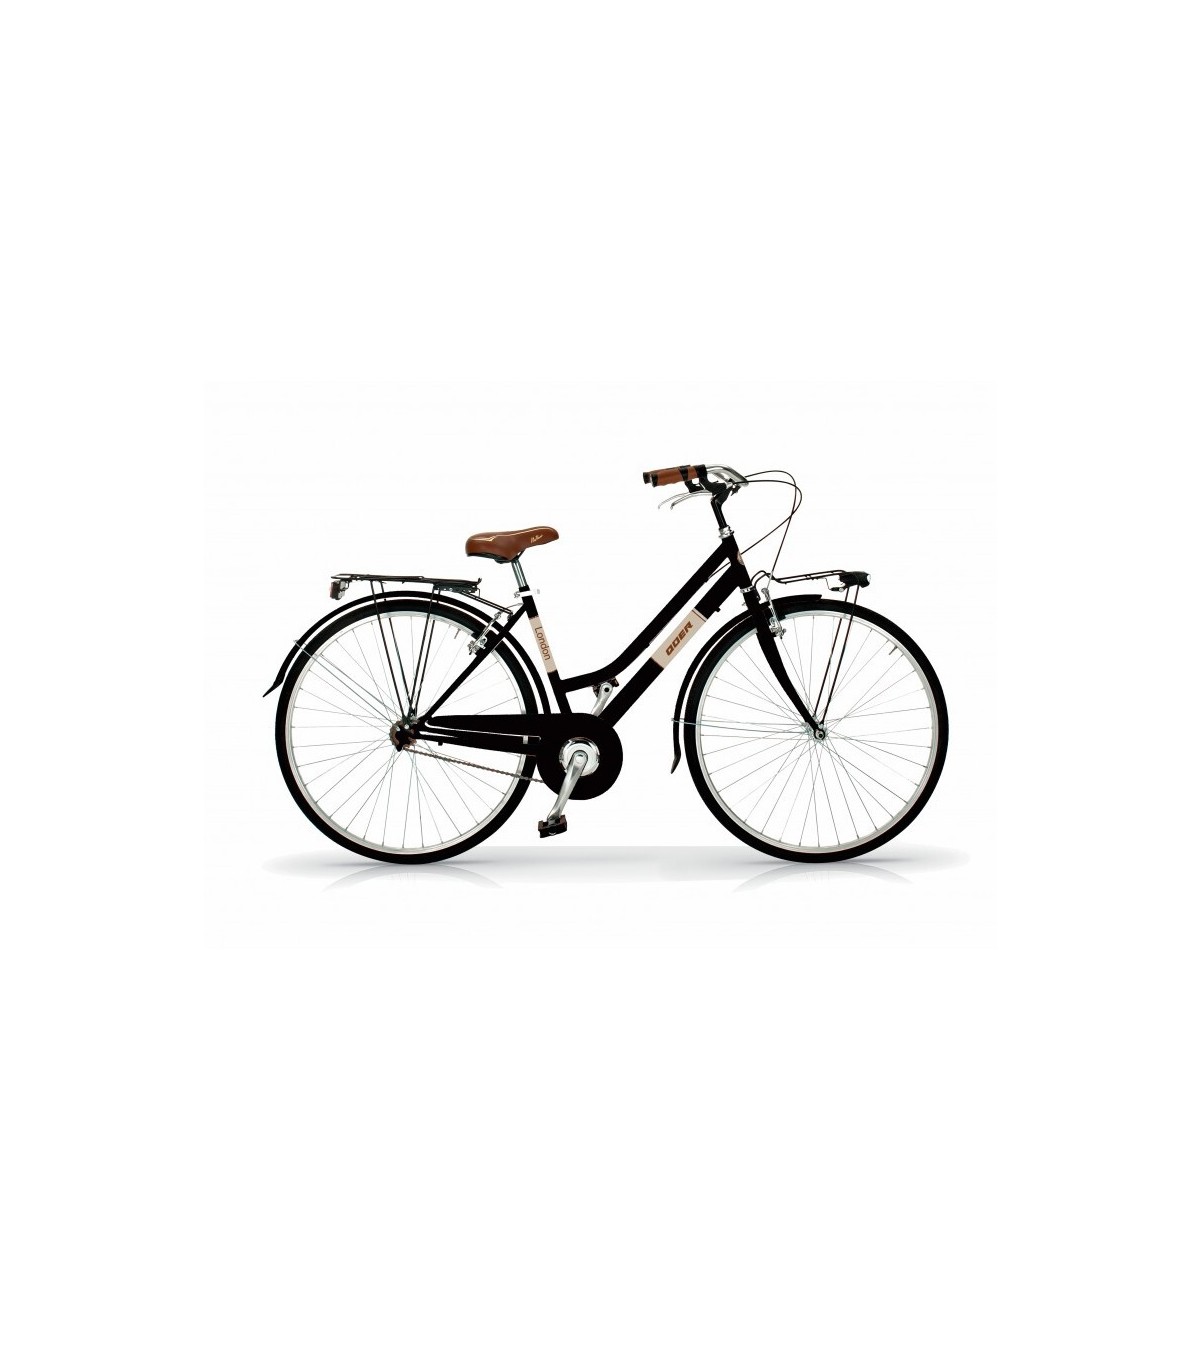 V BIKE Portabultos trasero bicicleta. Especial alforjas. Aluminio negro